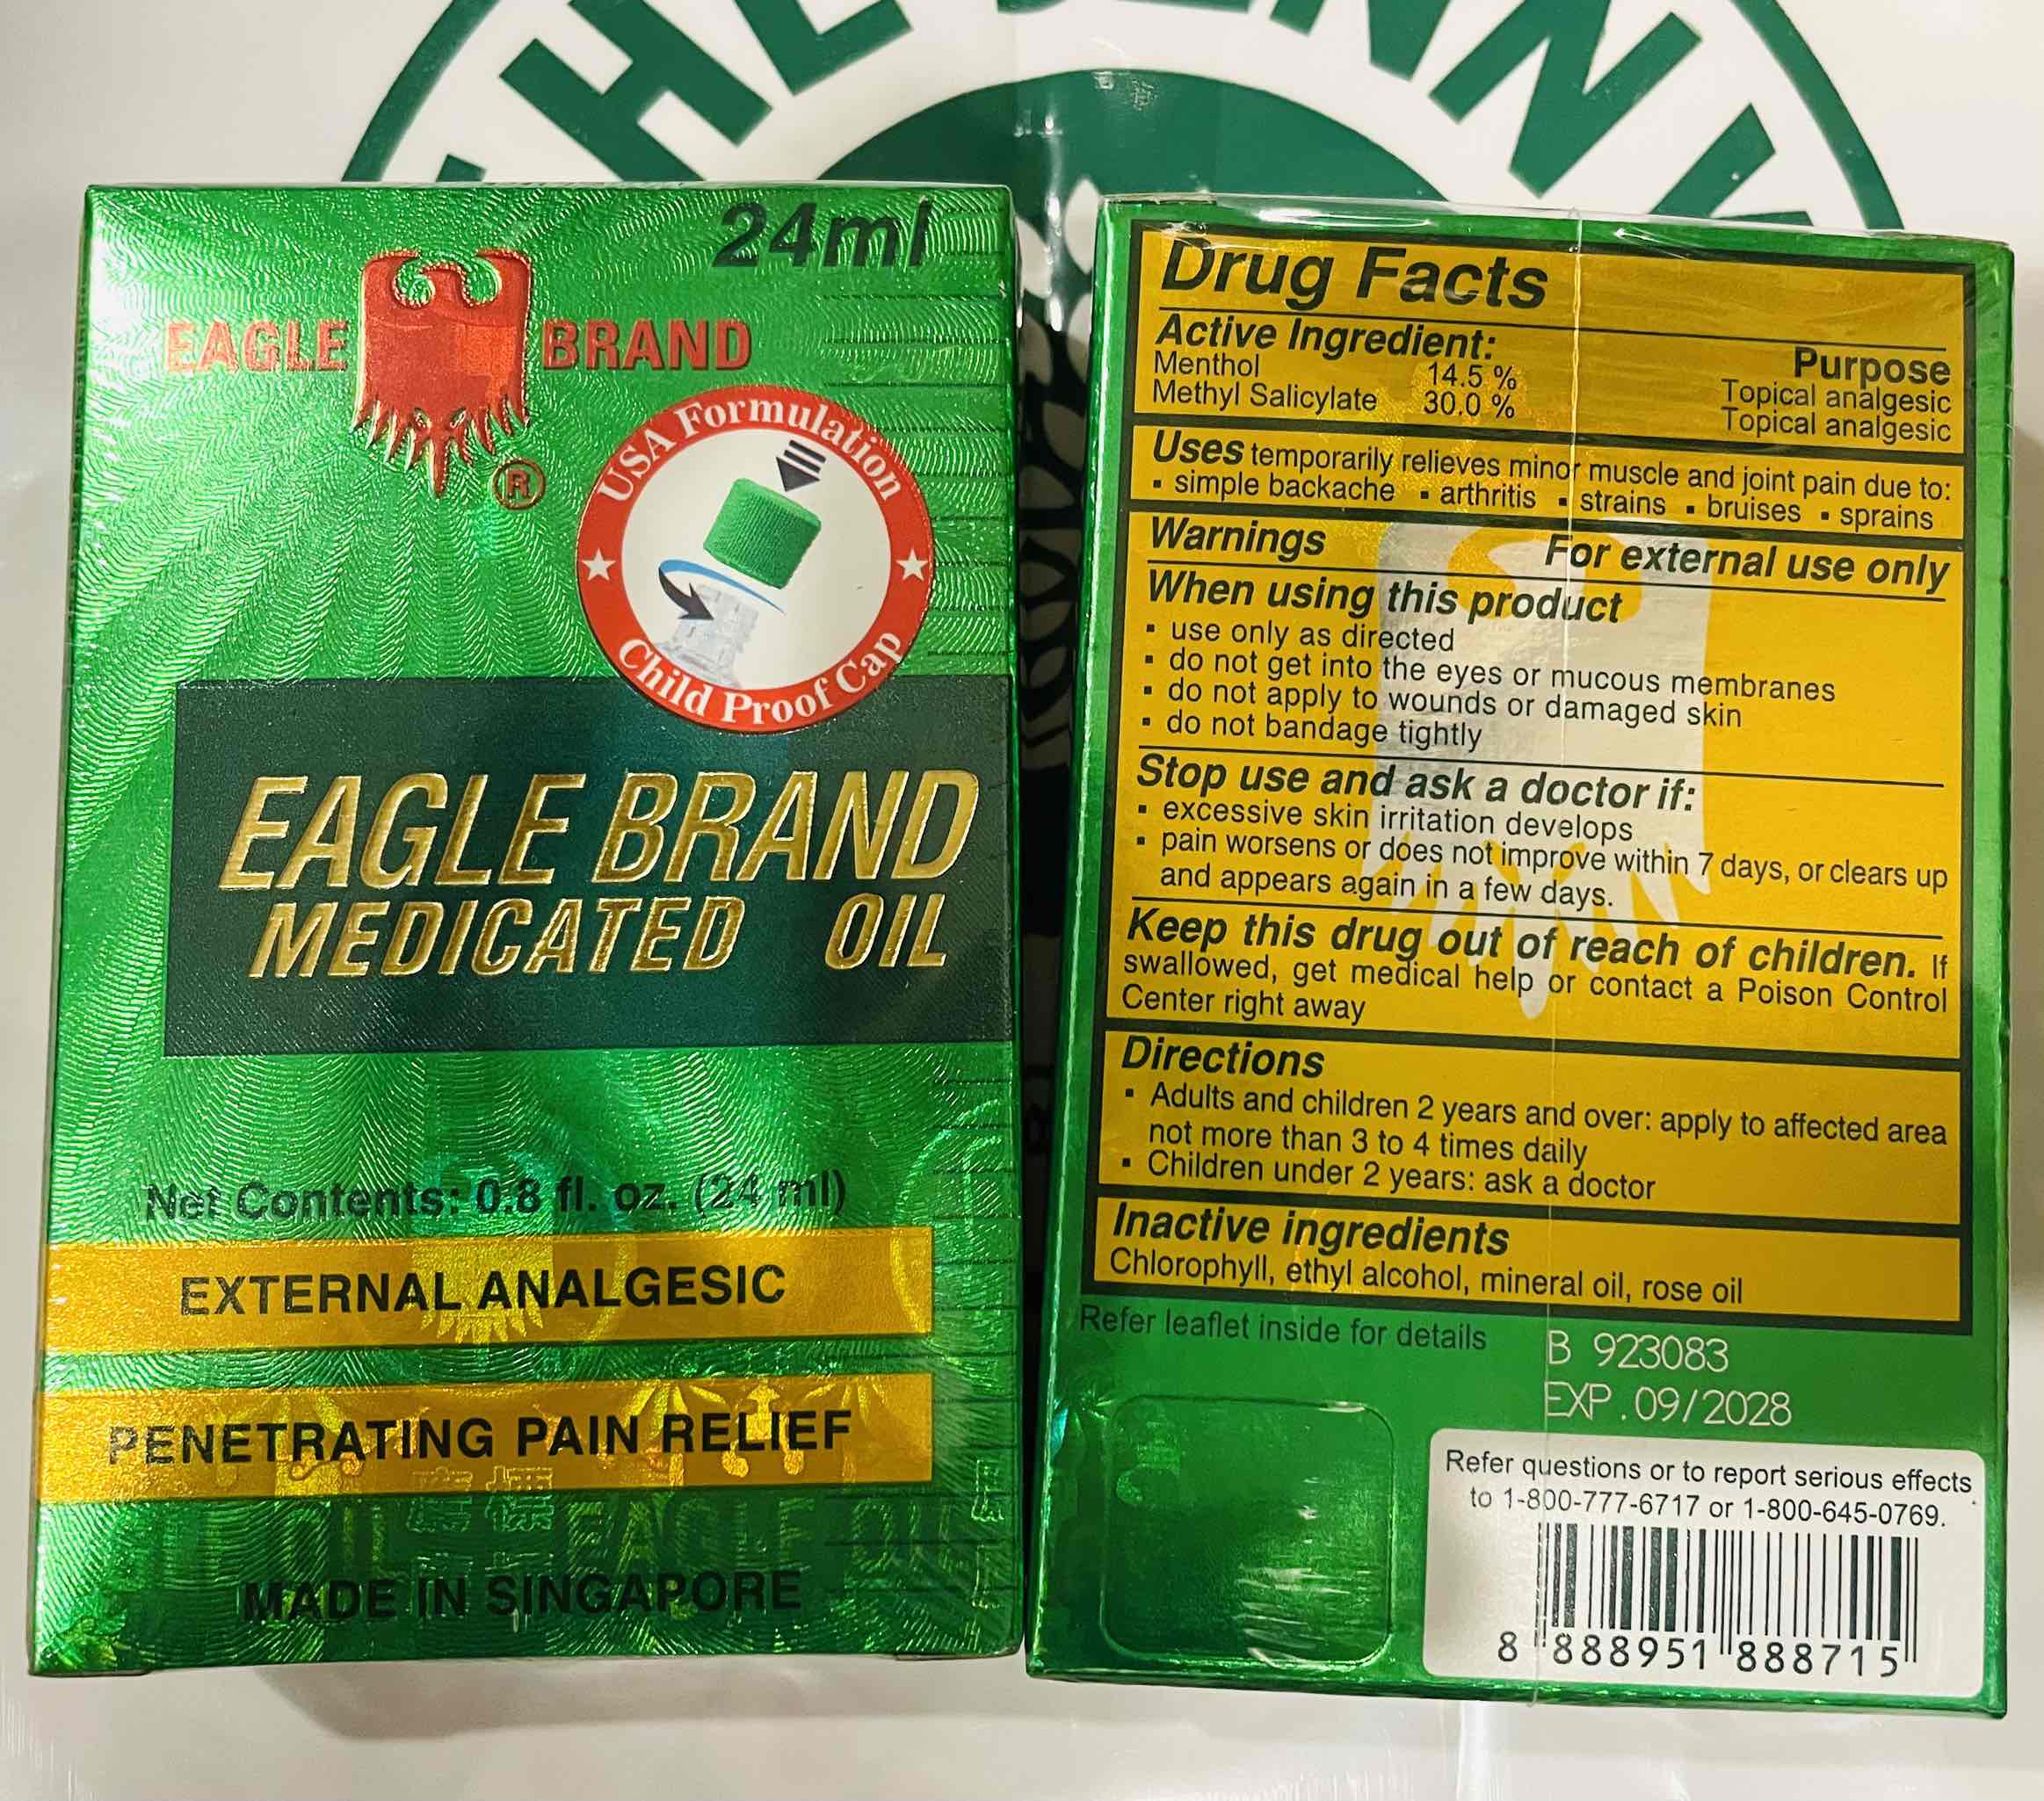 Dầu xanh Eagle Brand